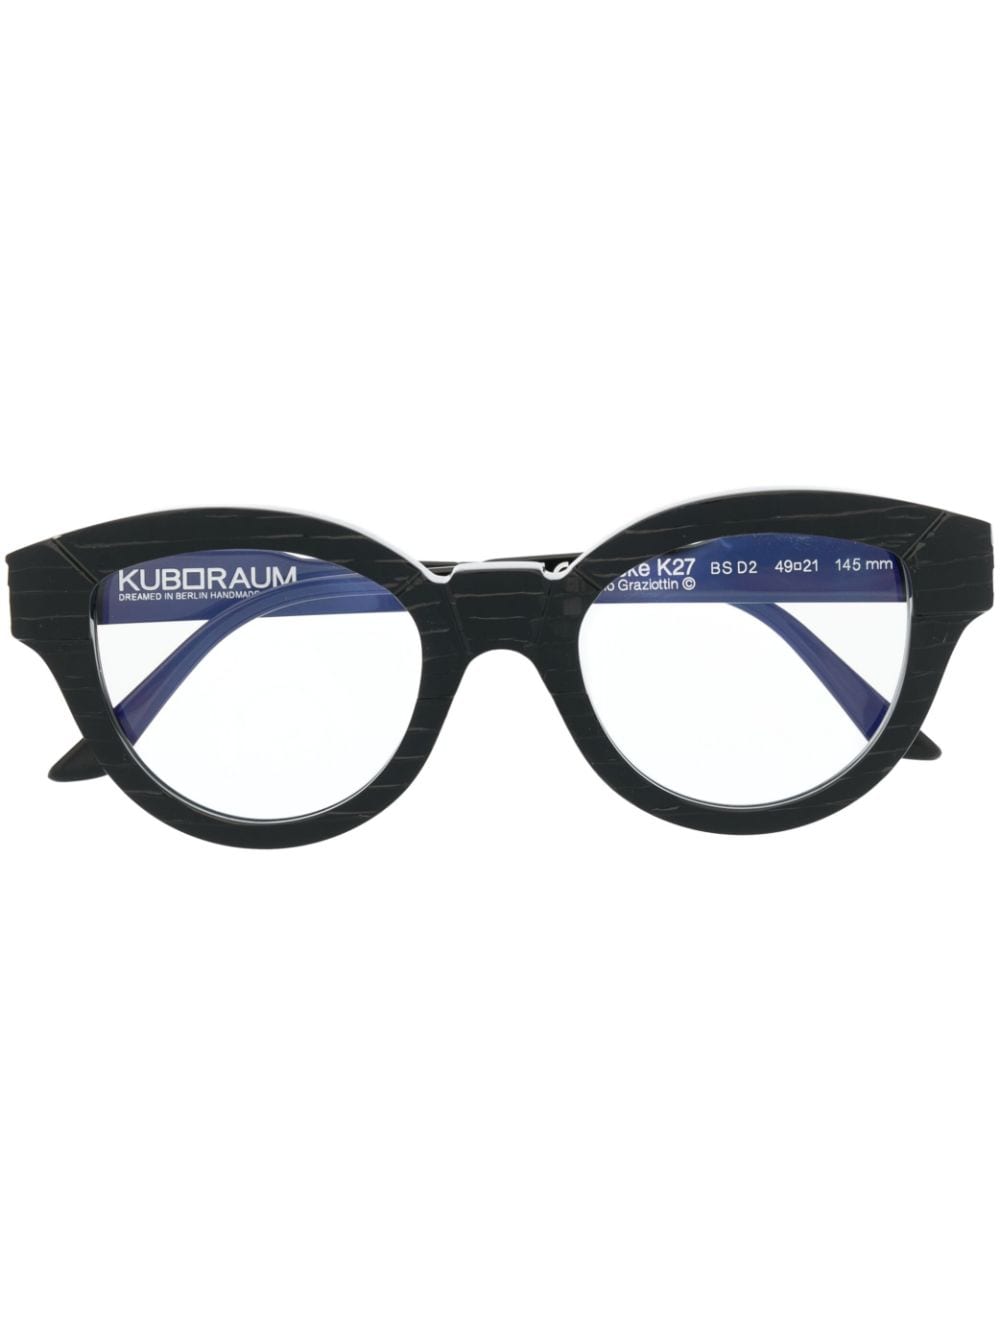 Kuboraum K27 cat-eye frame glasses - Black von Kuboraum